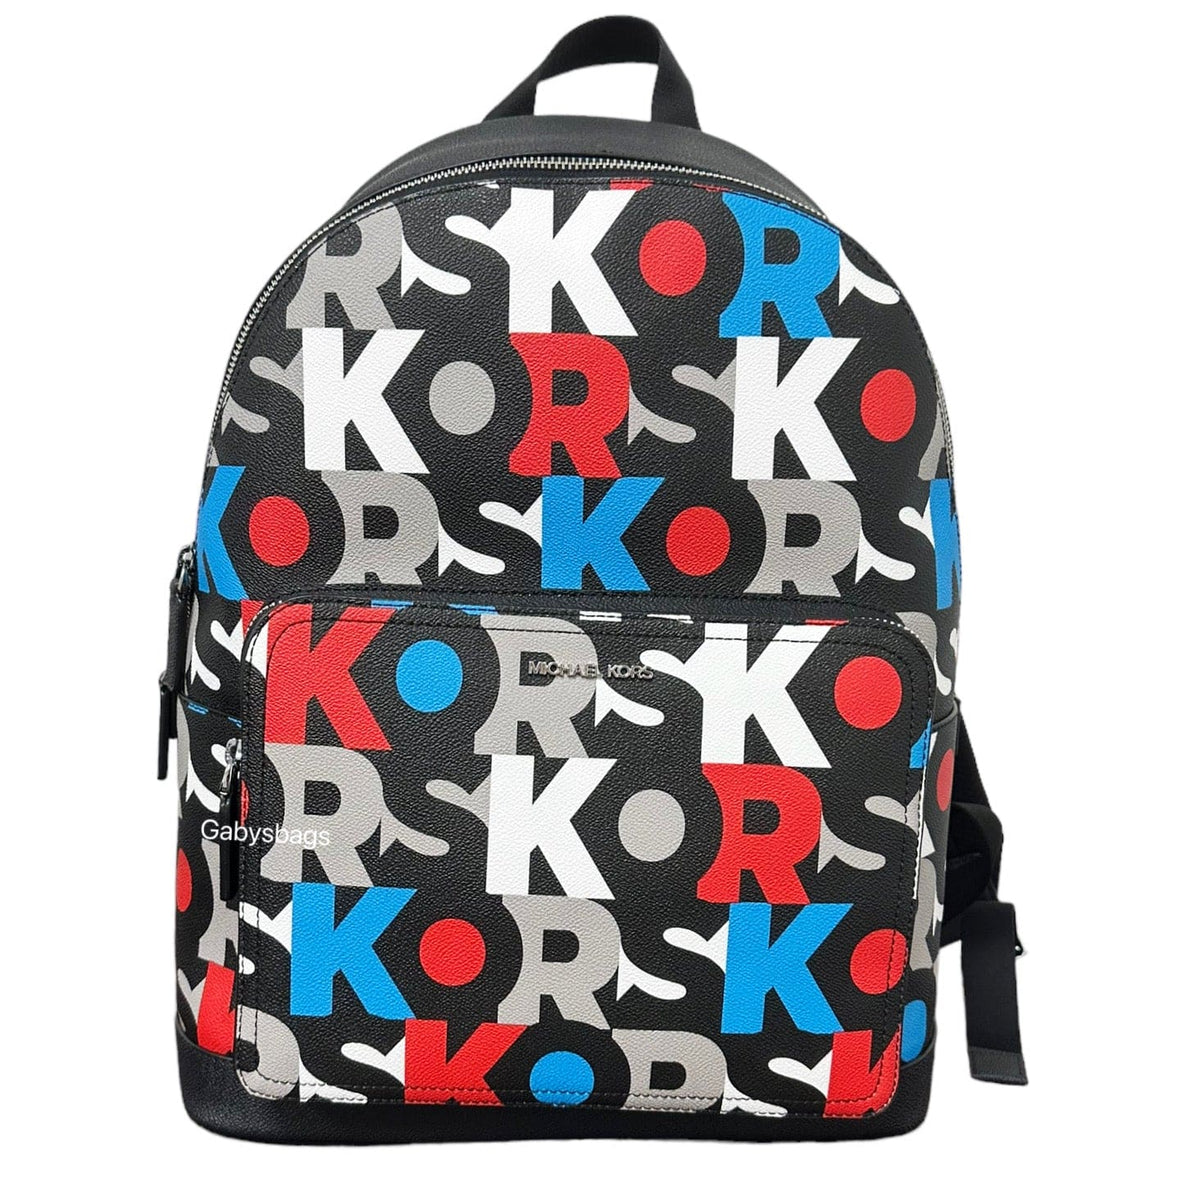 Michael kors cooper backpack review! 